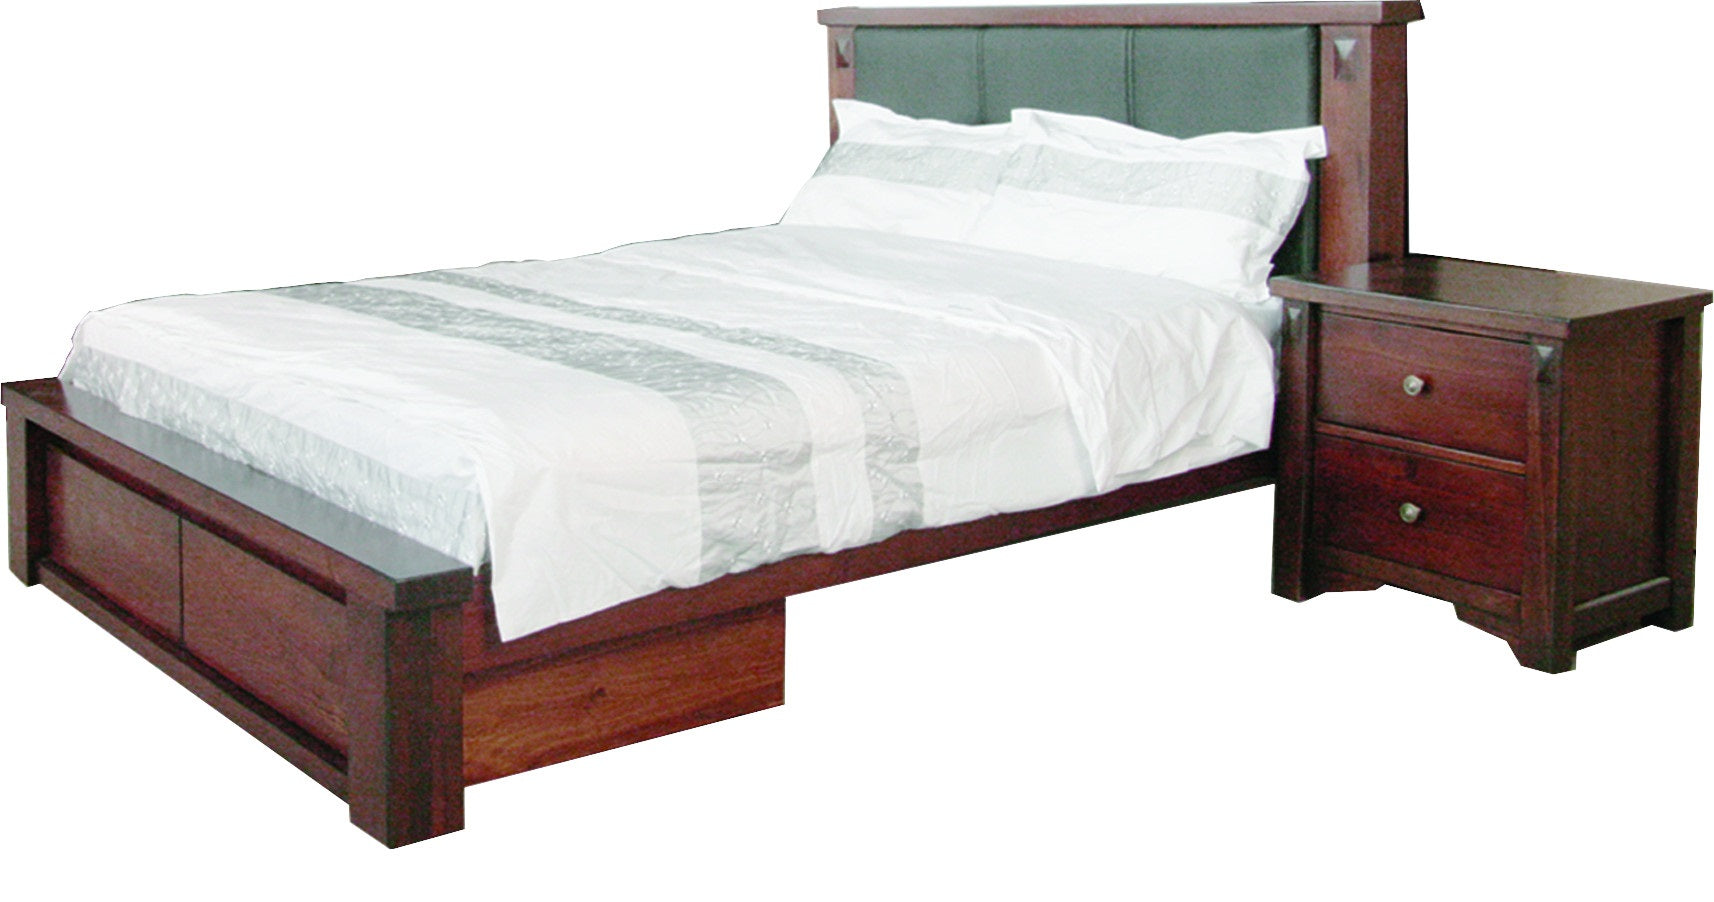 Armidale King Size Bed